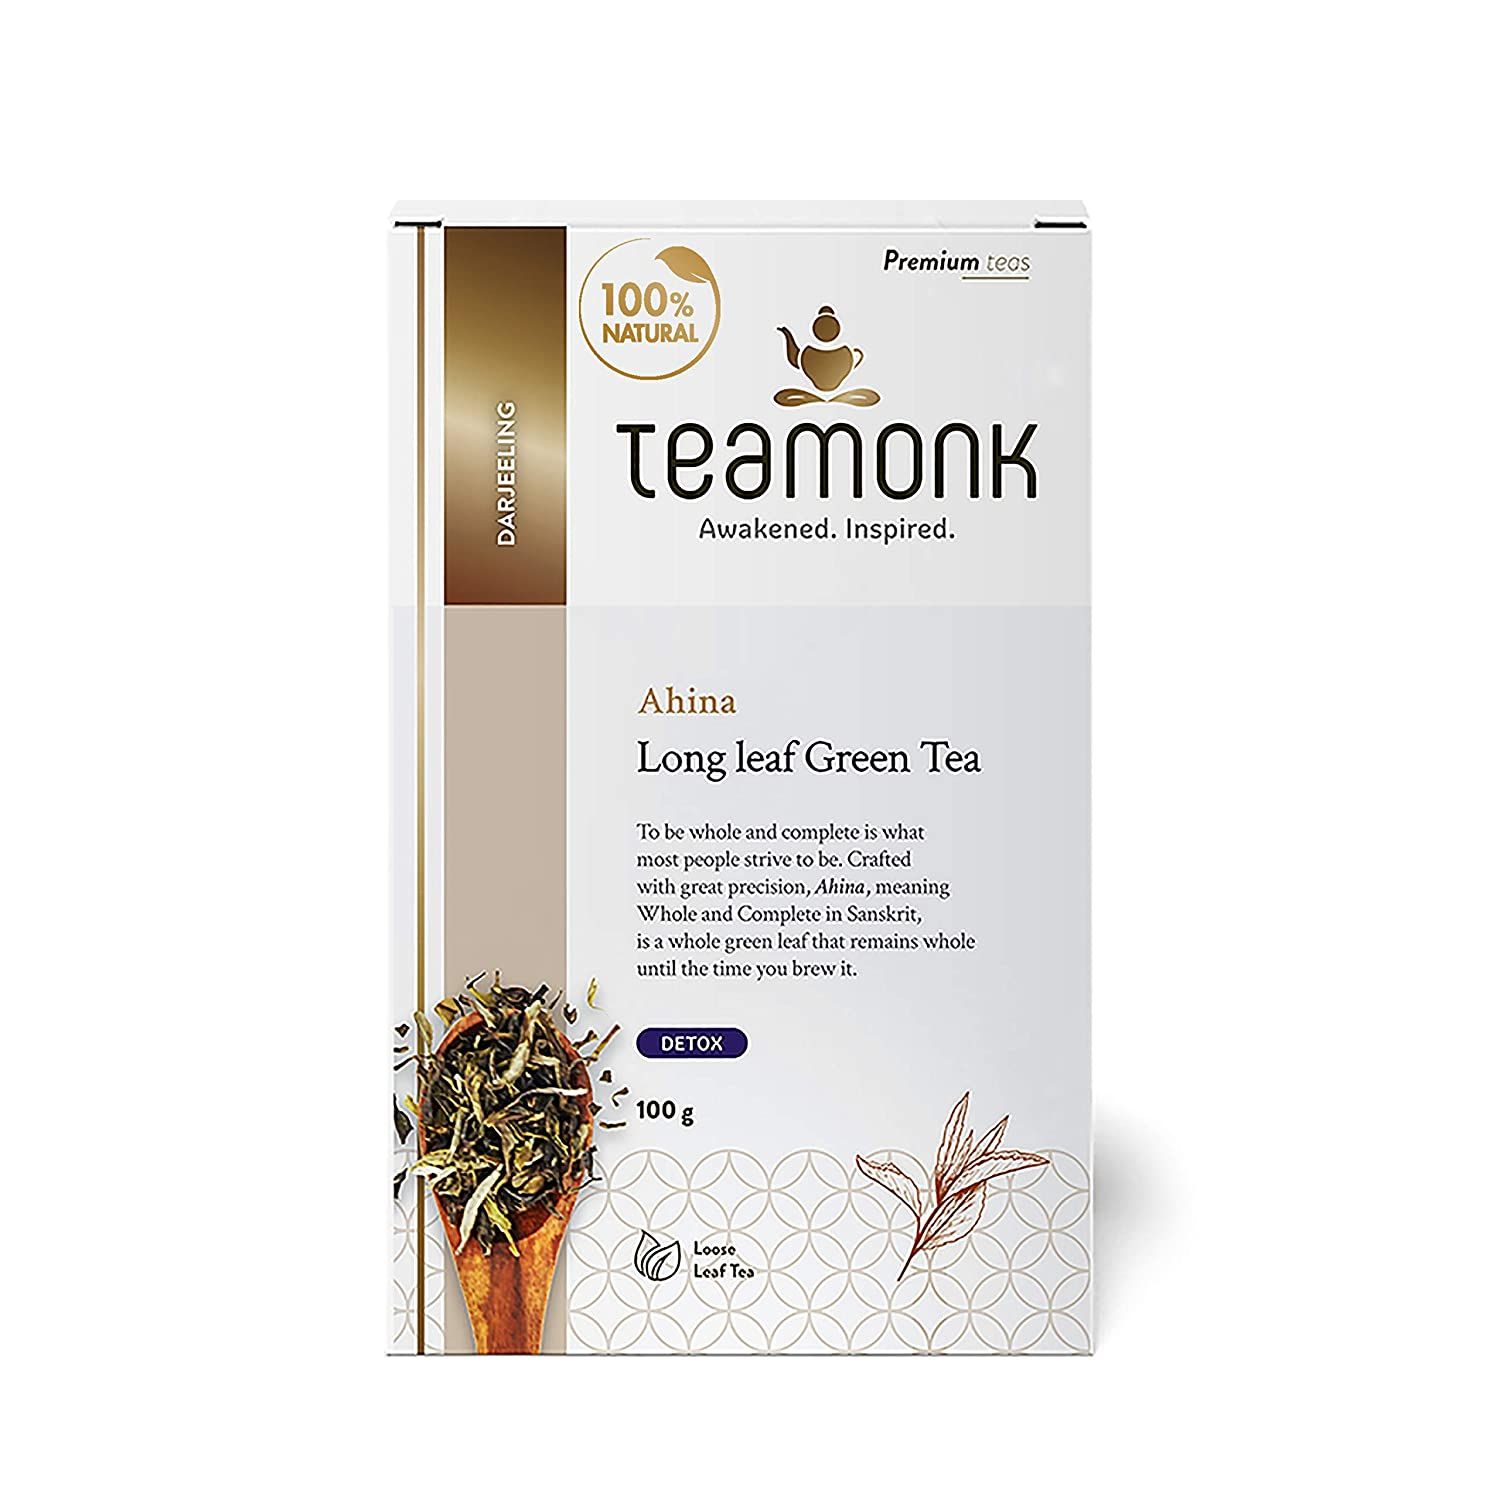 Teamonk Long Leaf Green Tea Image